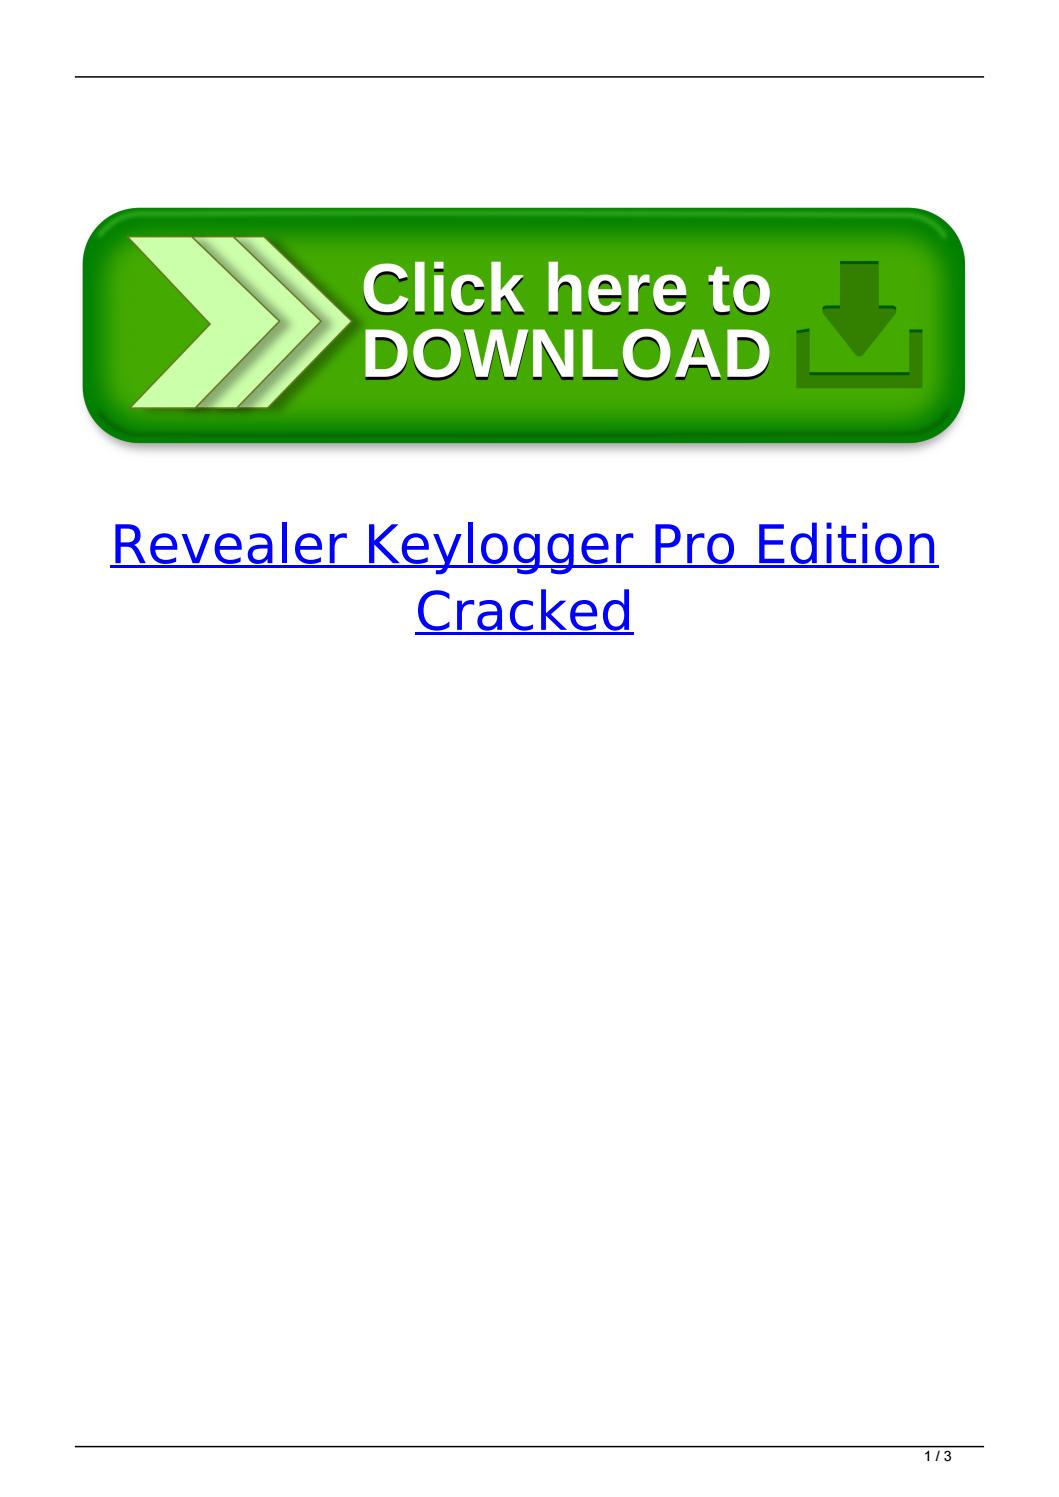 revealer keylogger pro crack 2.2